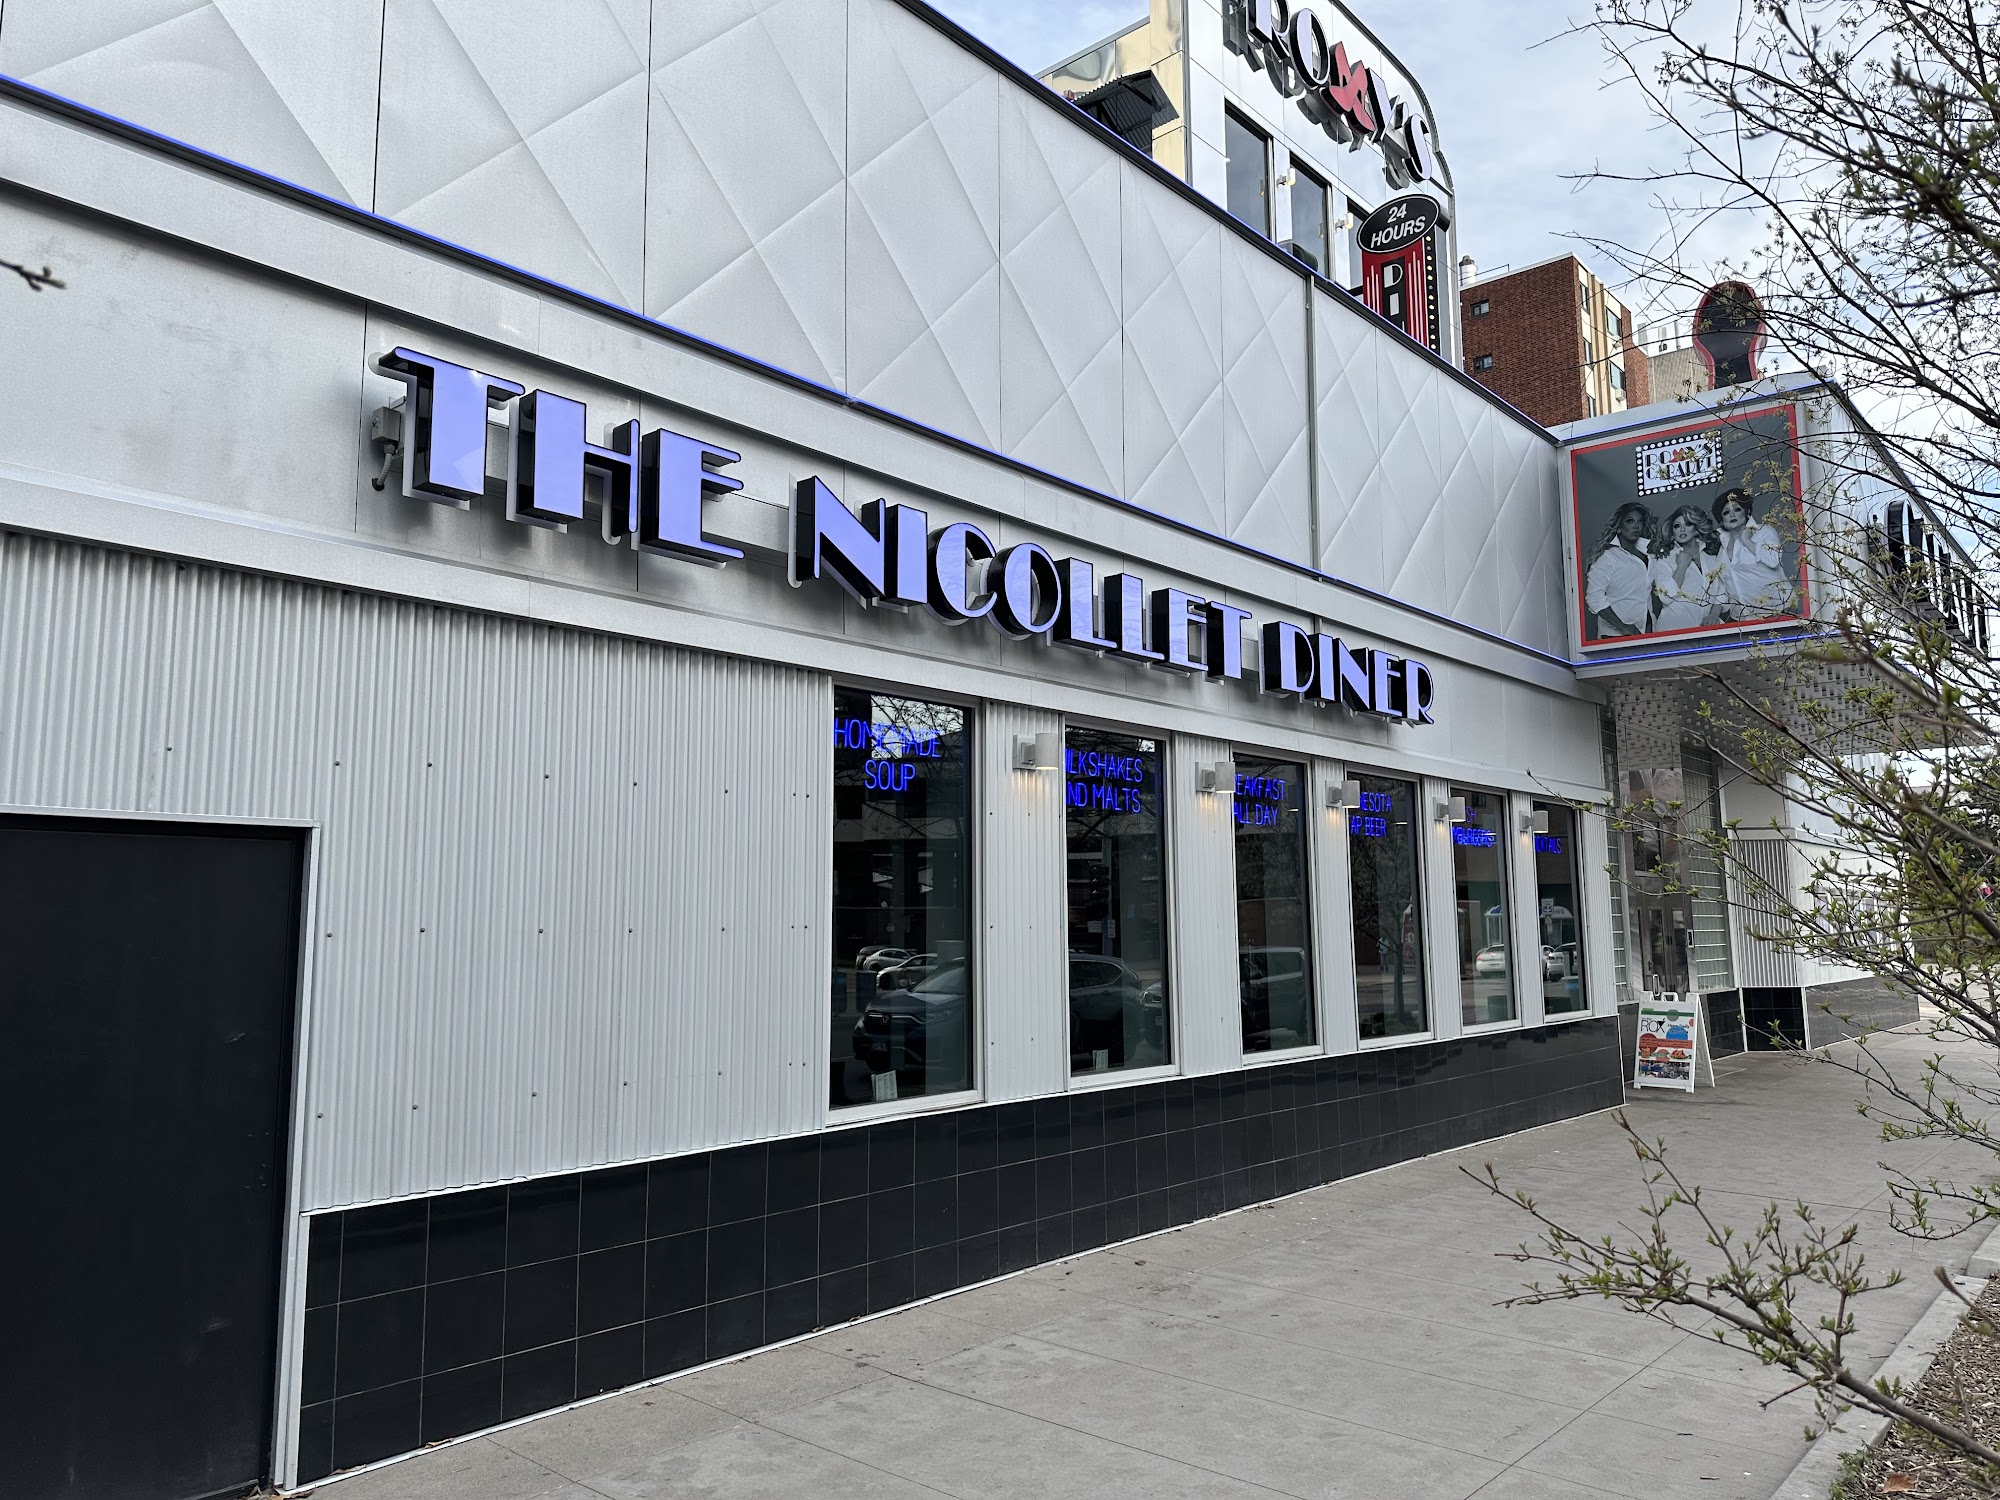 The Nicollet Diner